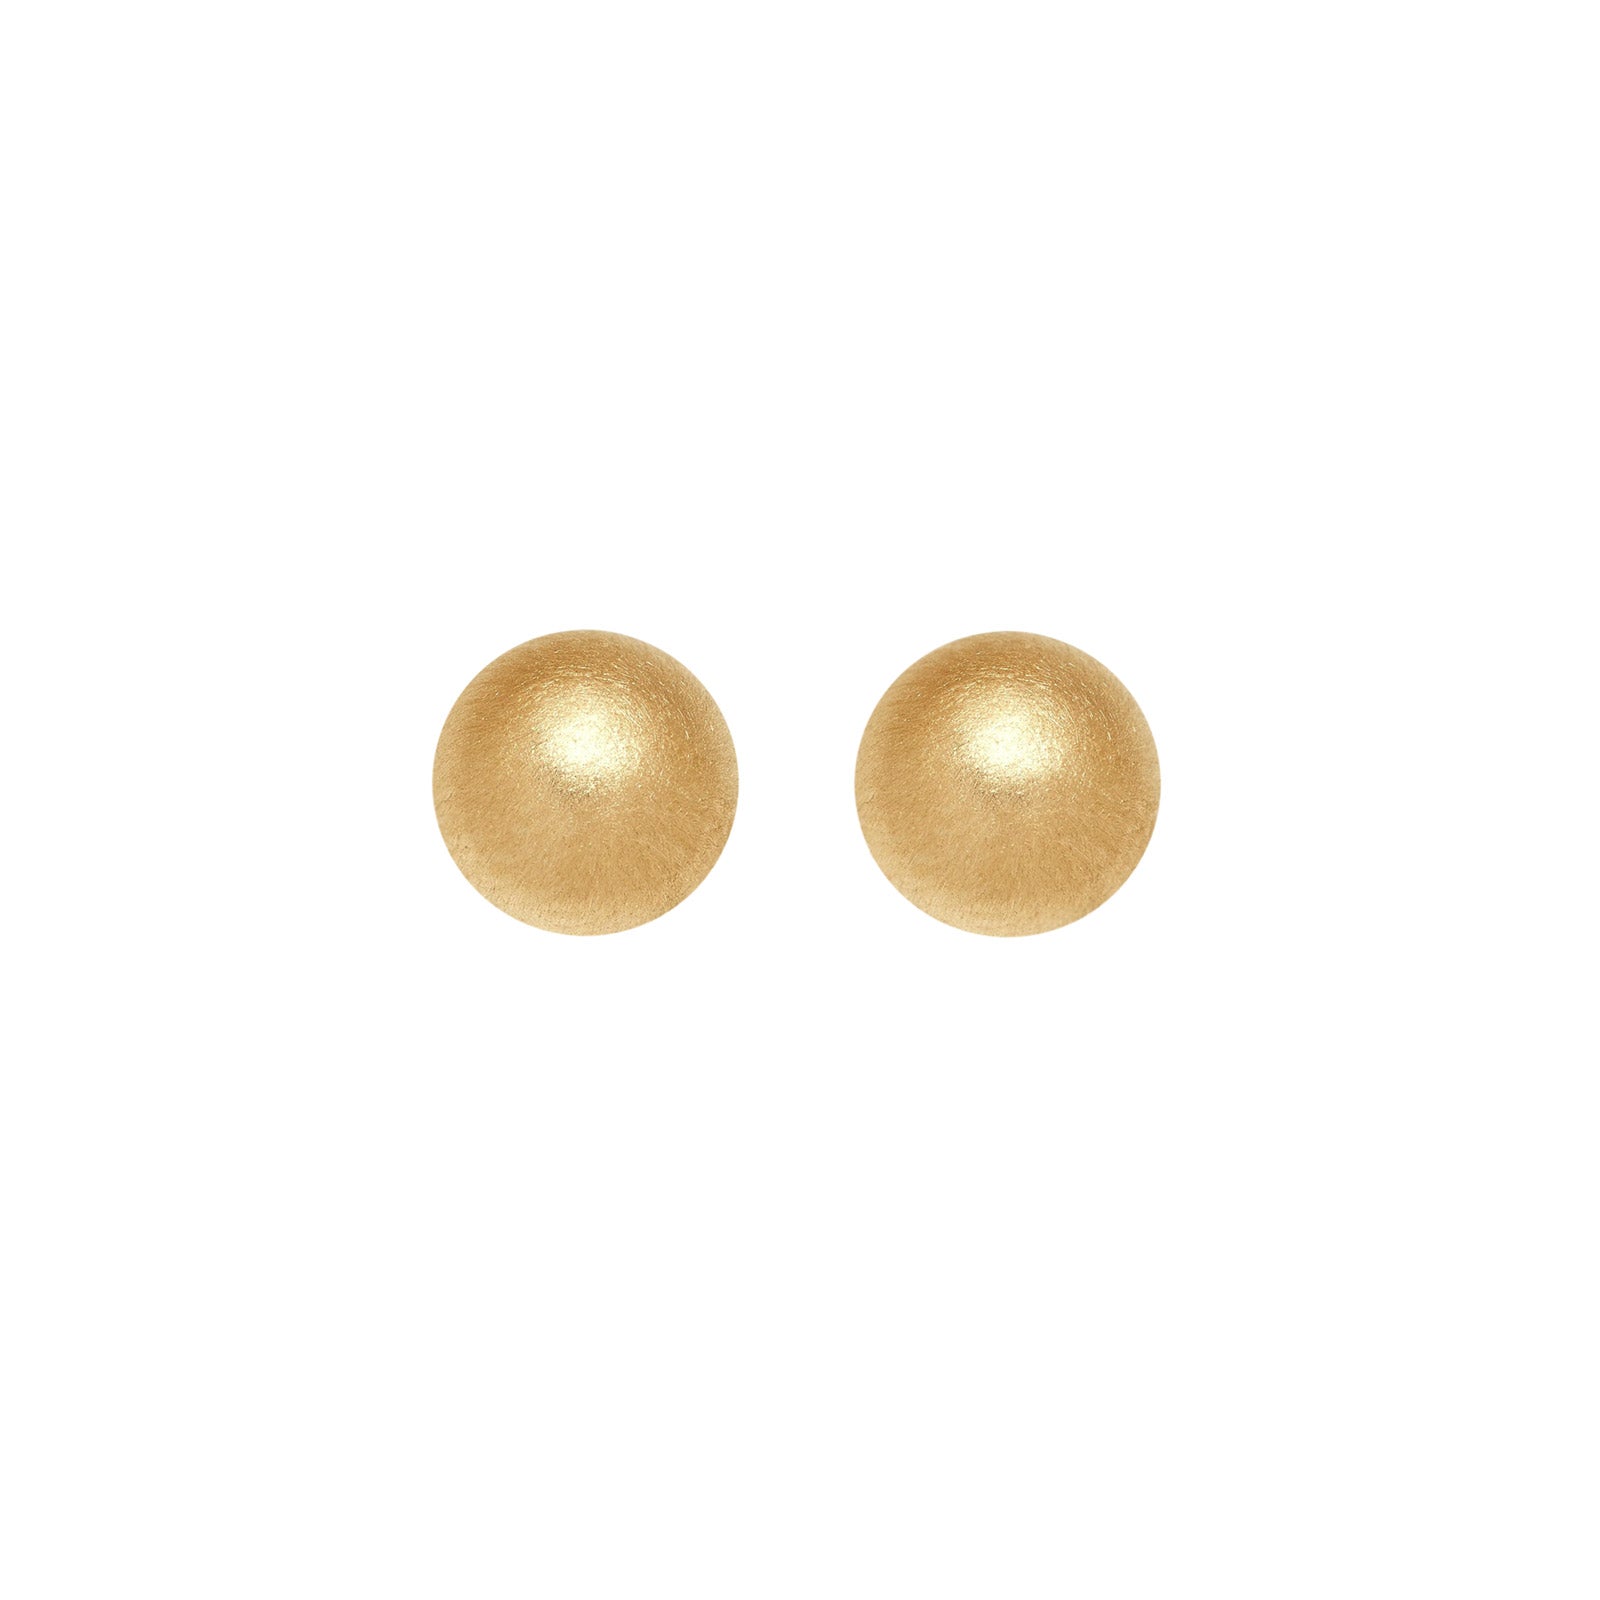 Satin Ball Stud Earrings in 14K Yellow Gold 5mm